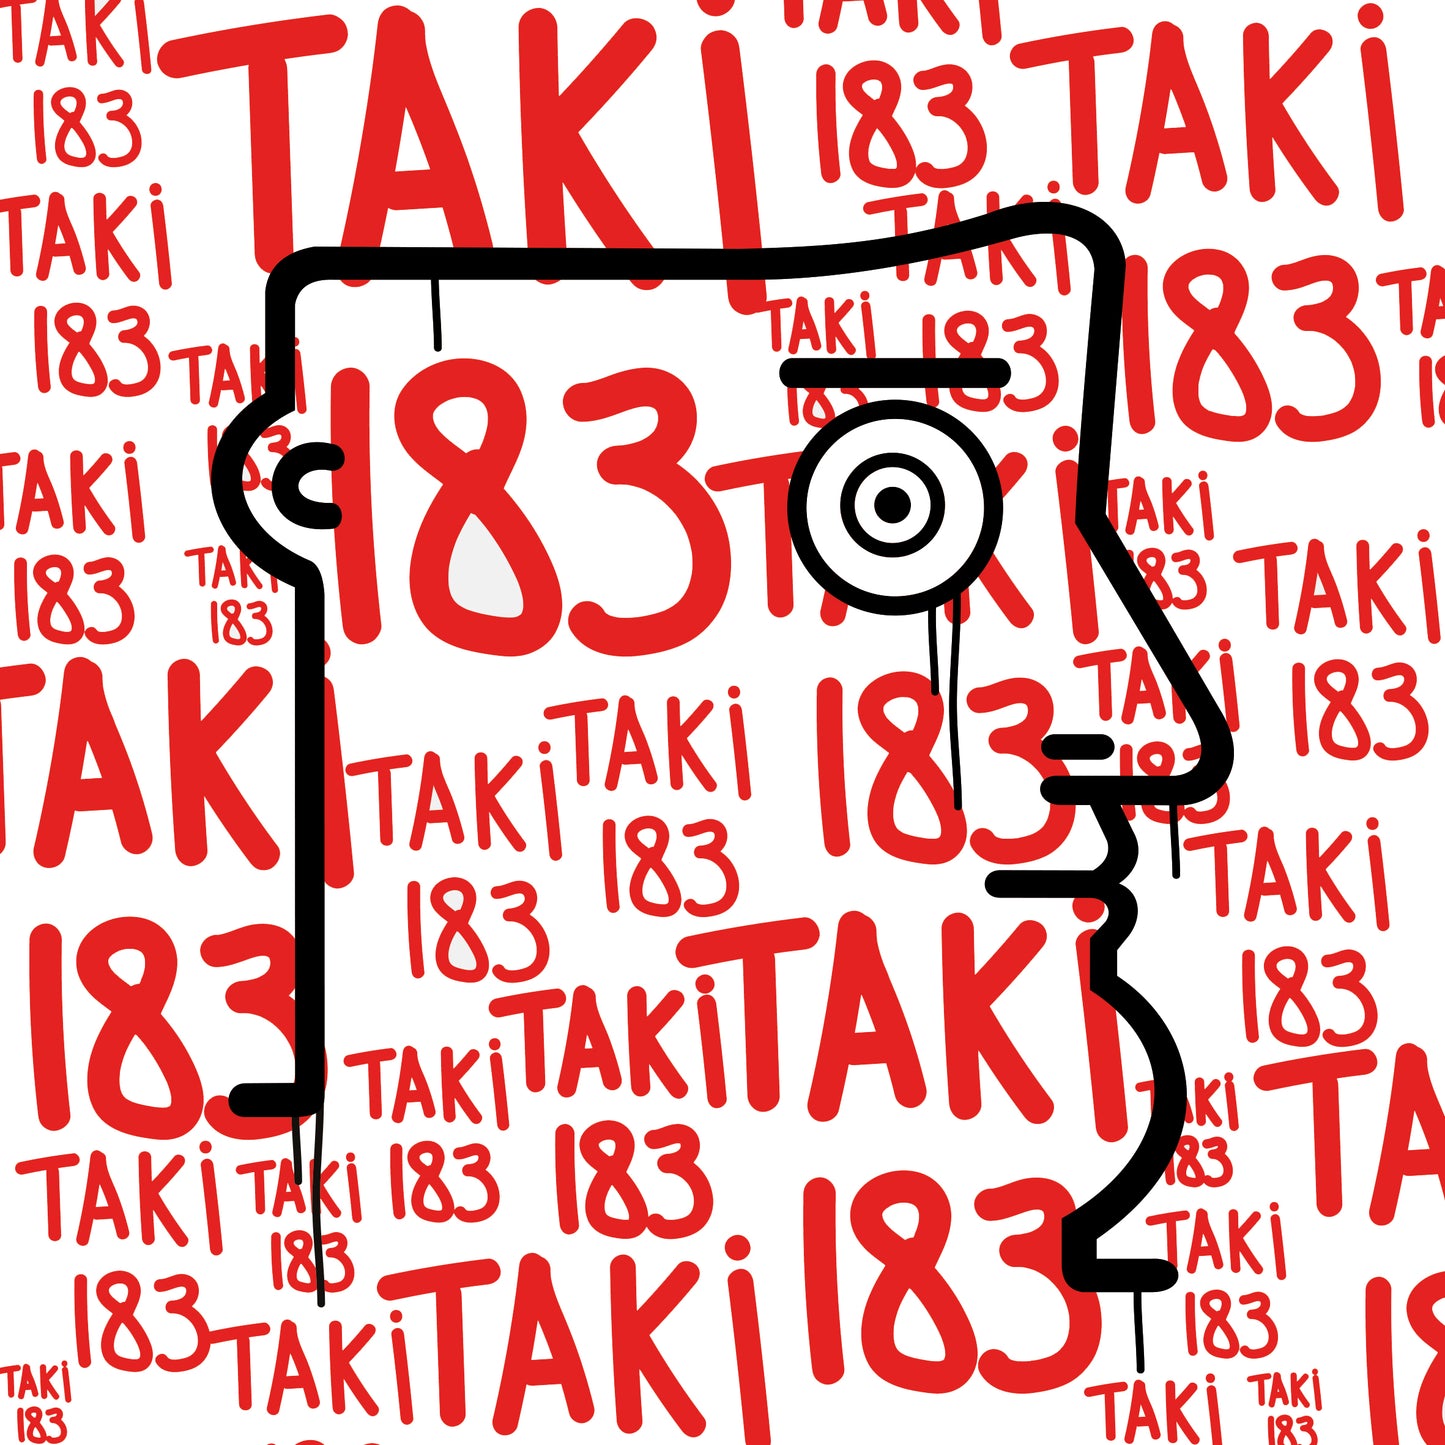 Taki 183 (IABO classic leitmotiv - tribute 50th Anniversary)